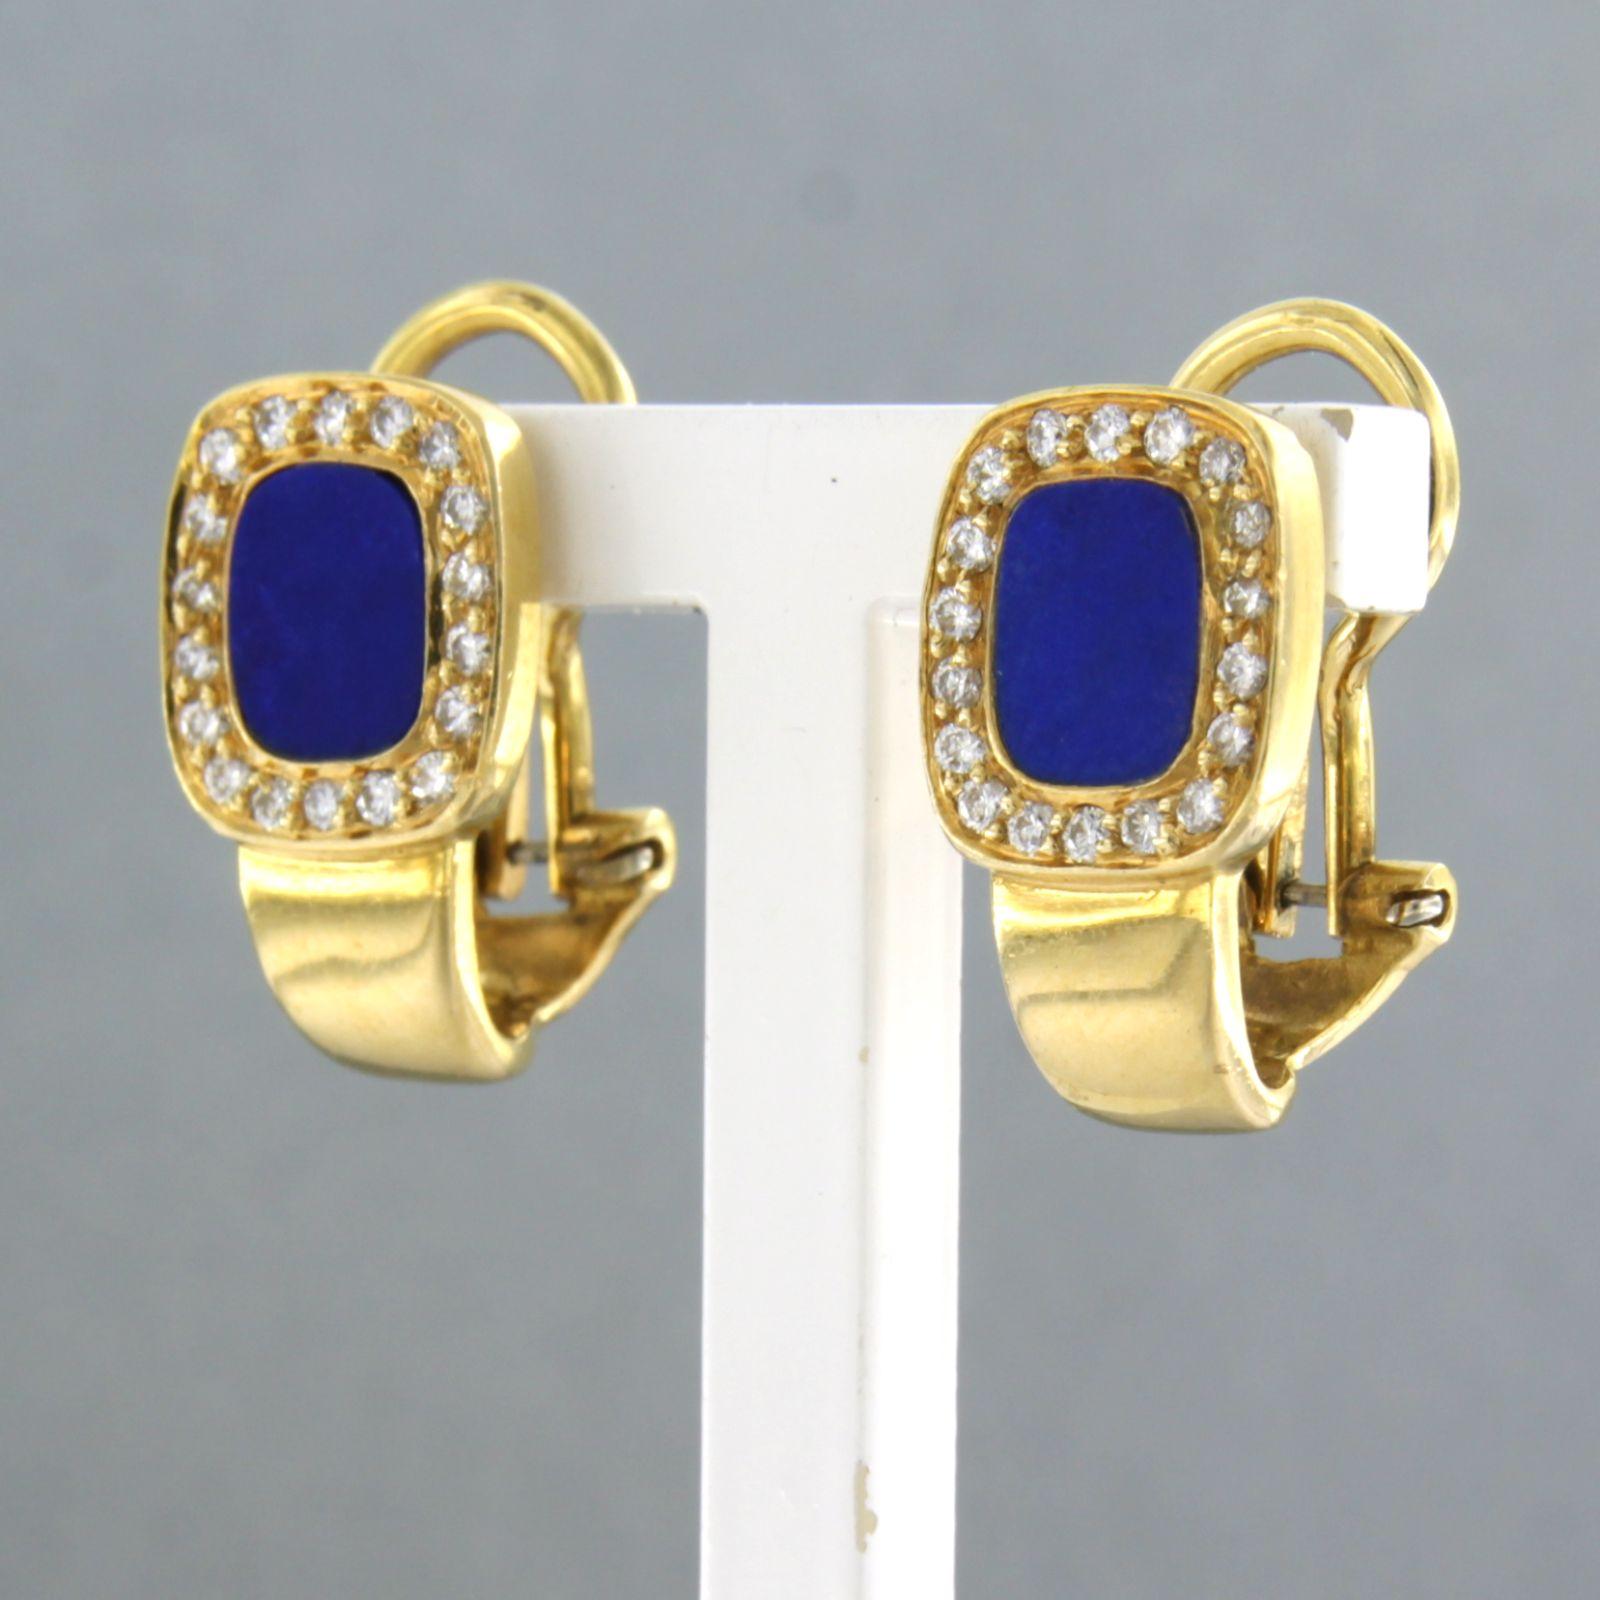 Women's Earrings set with lapis lazuli and diamonds 18k yellow gold